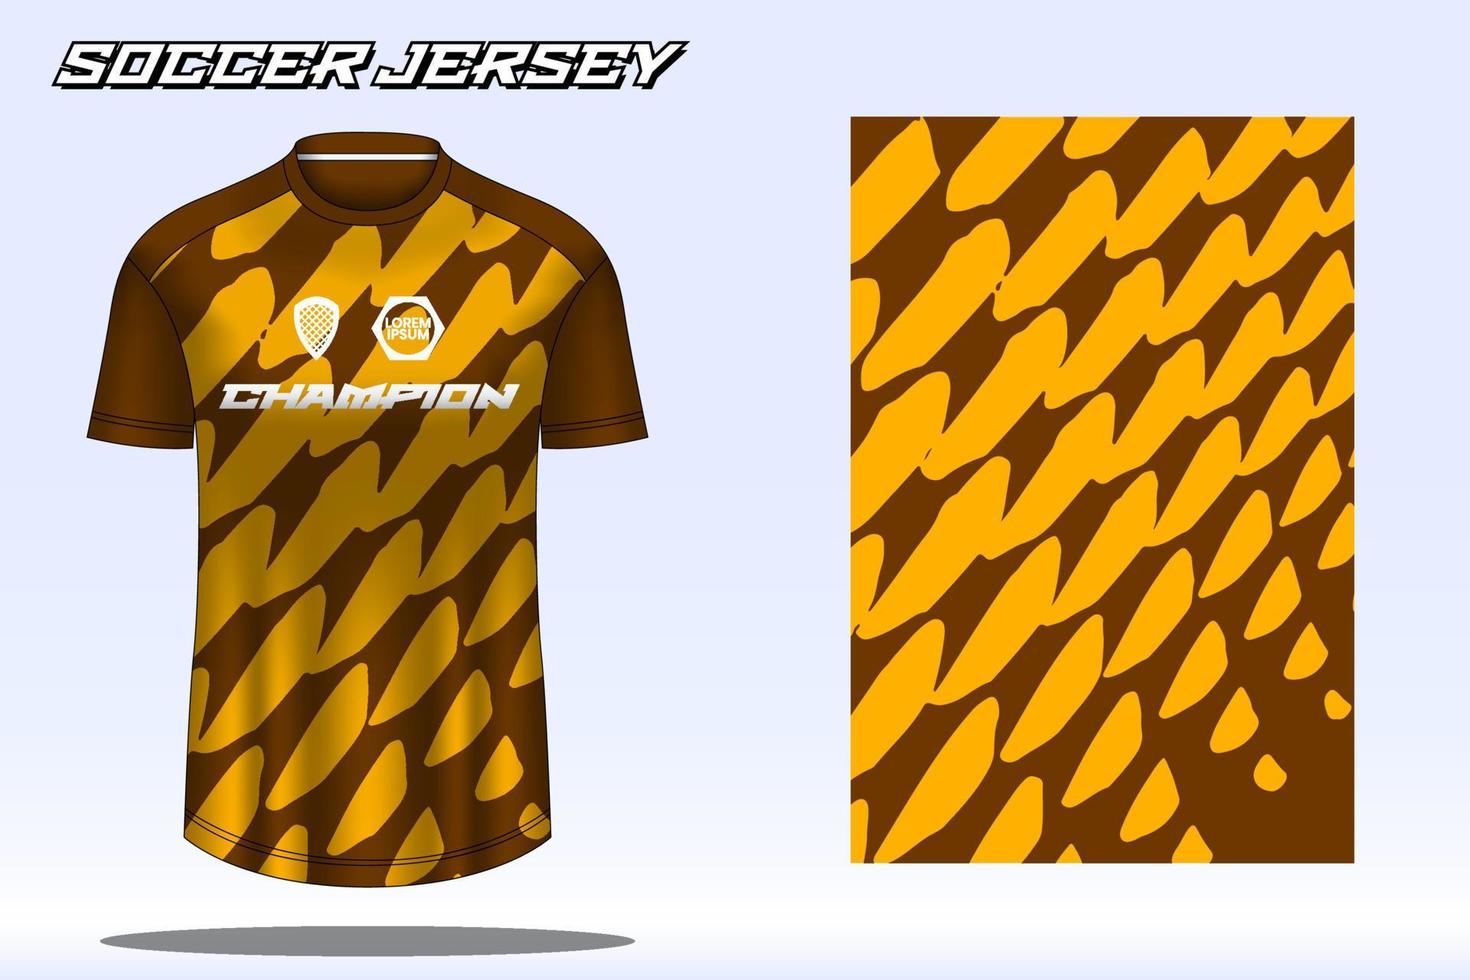 Soccer jersey sport t-shirt design mockup for football club 09 vector